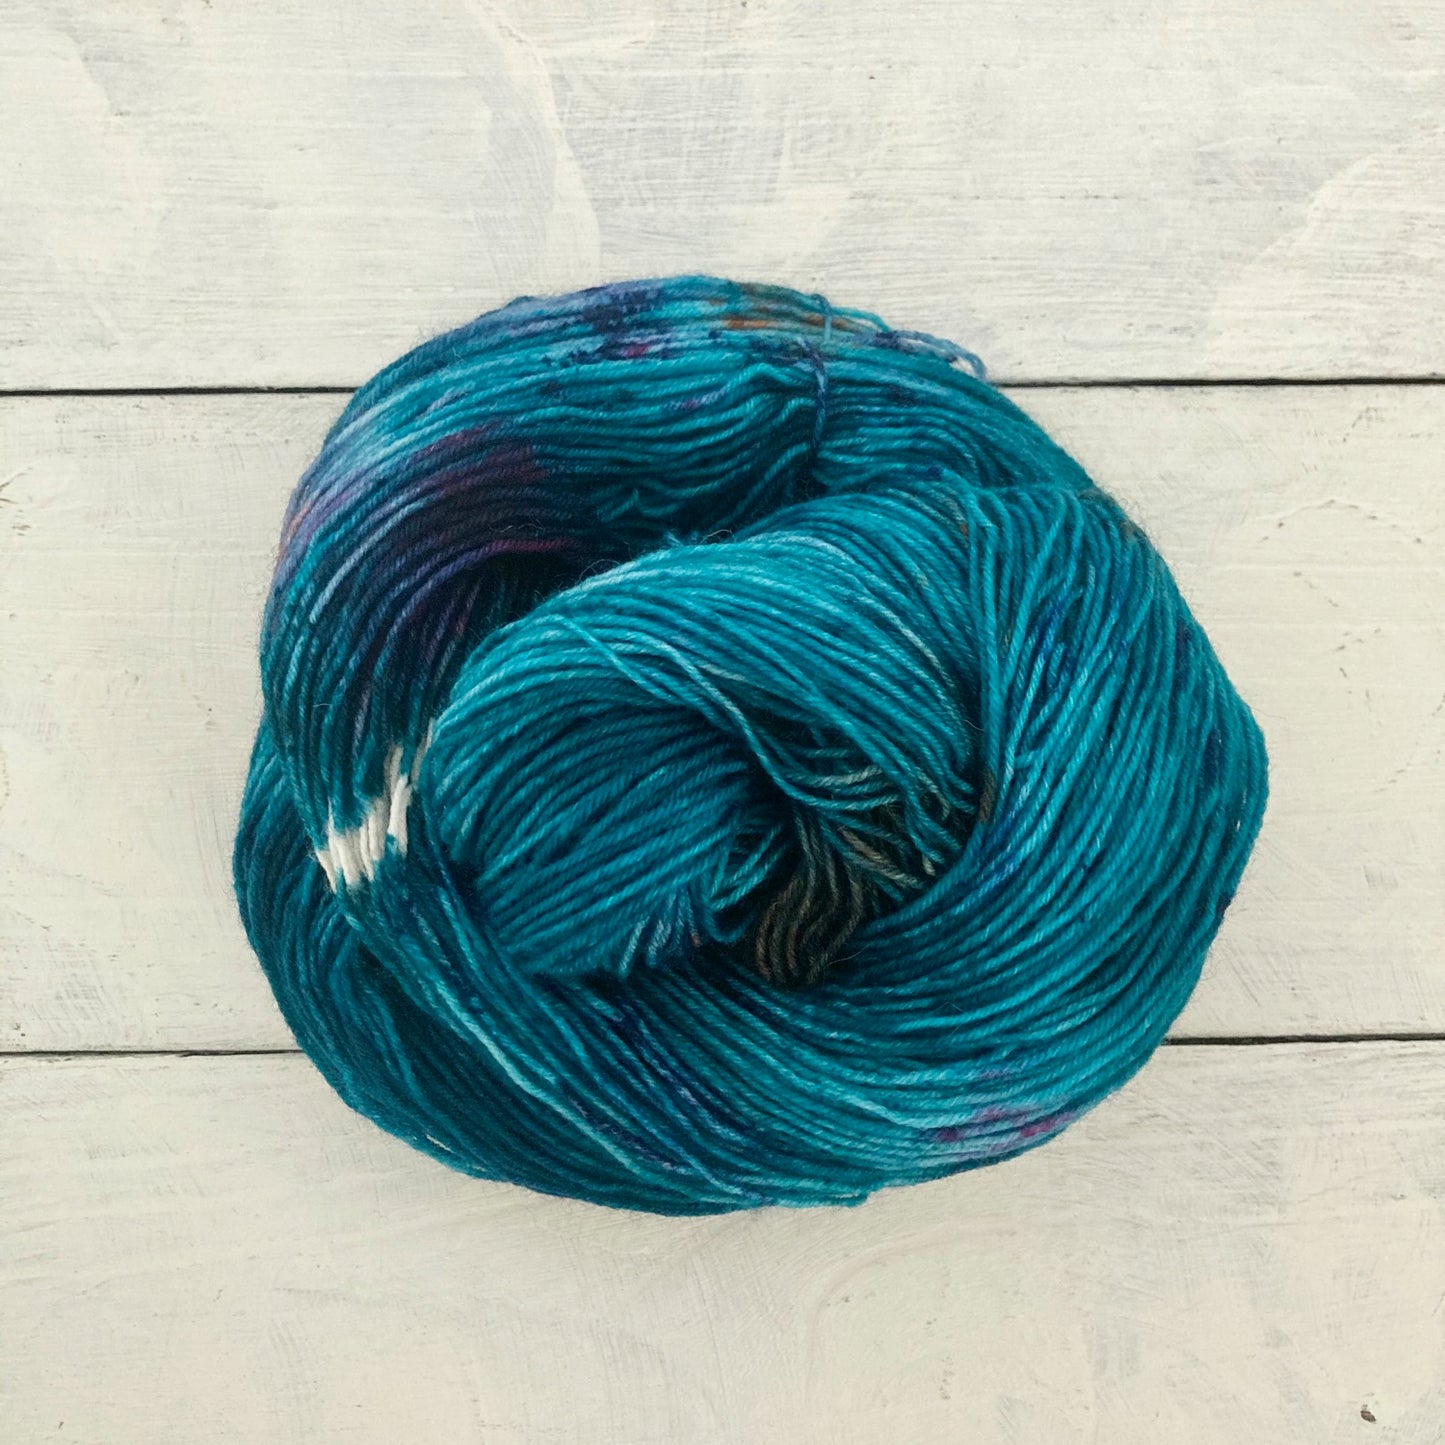 Hand-dyed yarn No.148 sock yarn "Metsalaulu"